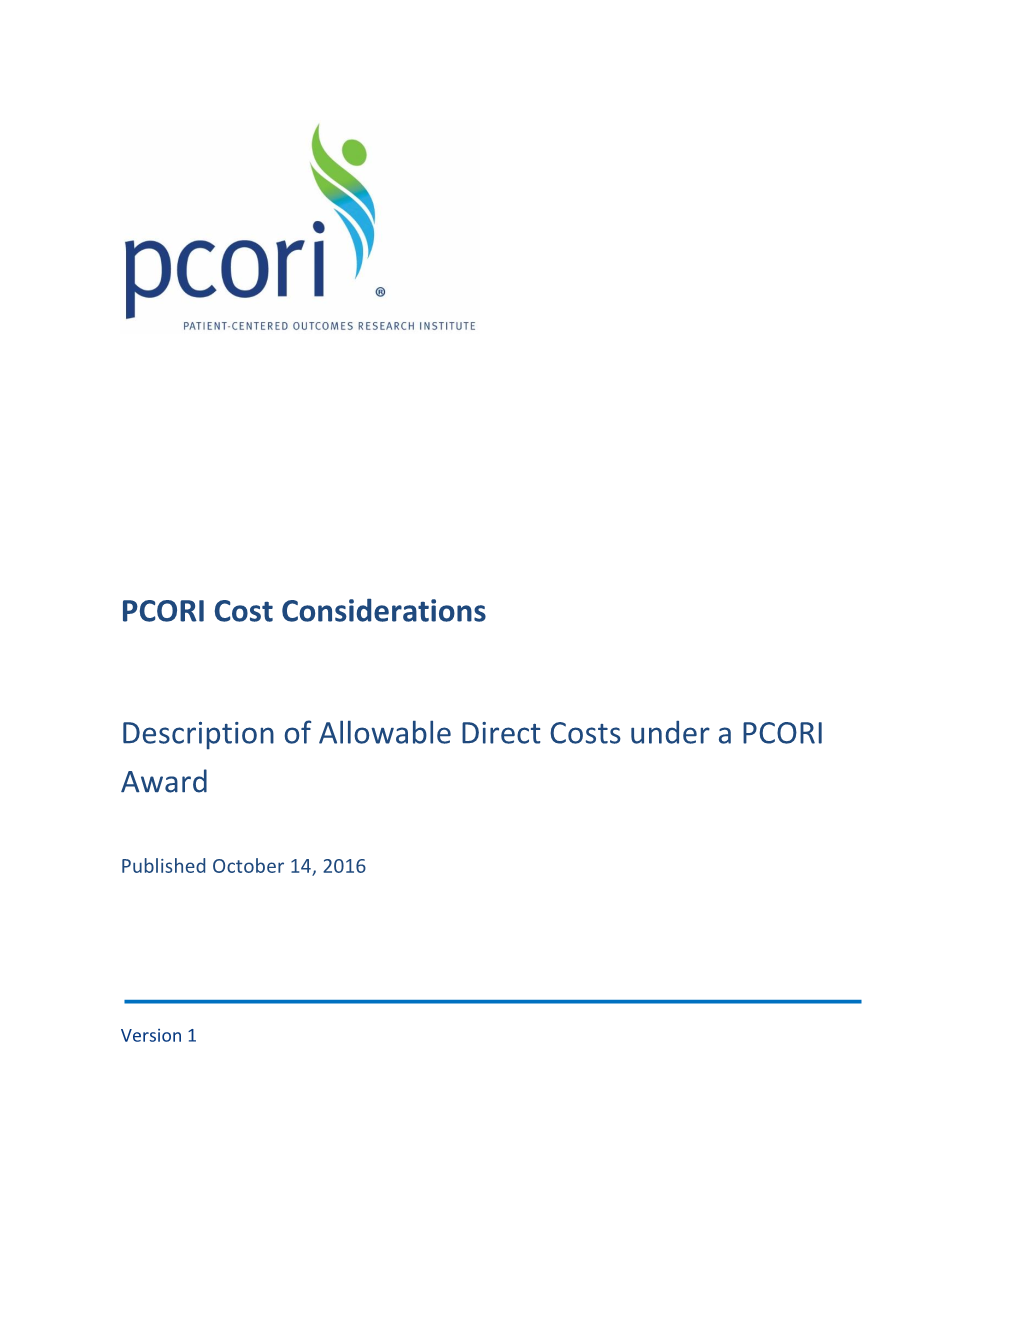 Description of Allowable Direct Costs Under a PCORI Award